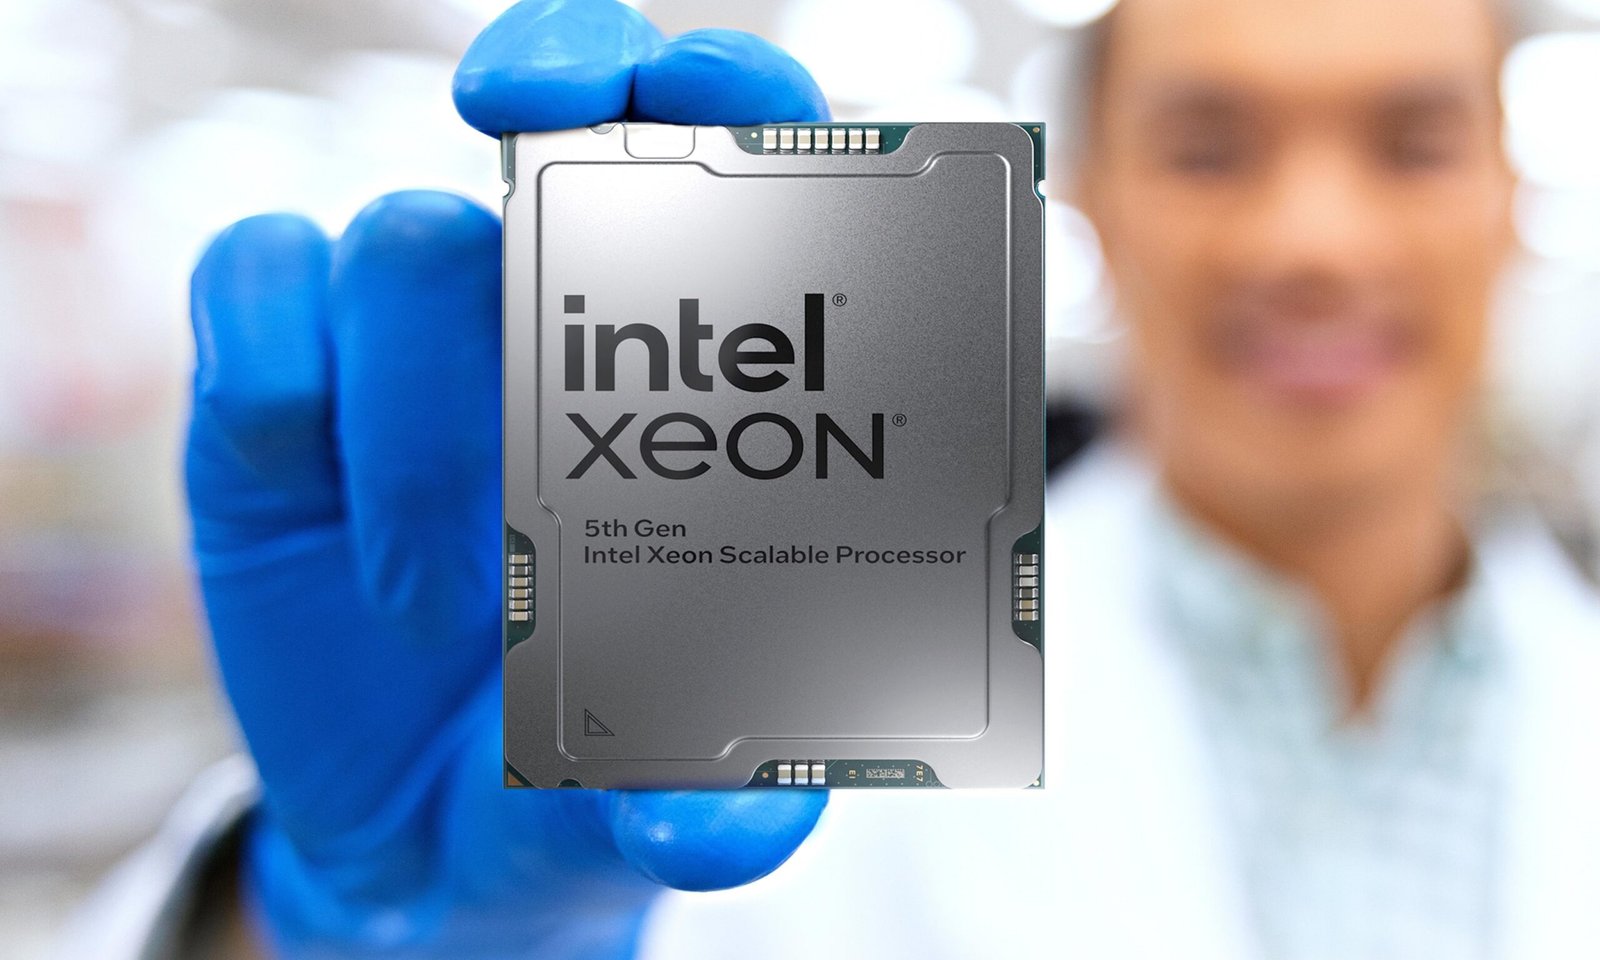 Intel xeon processors